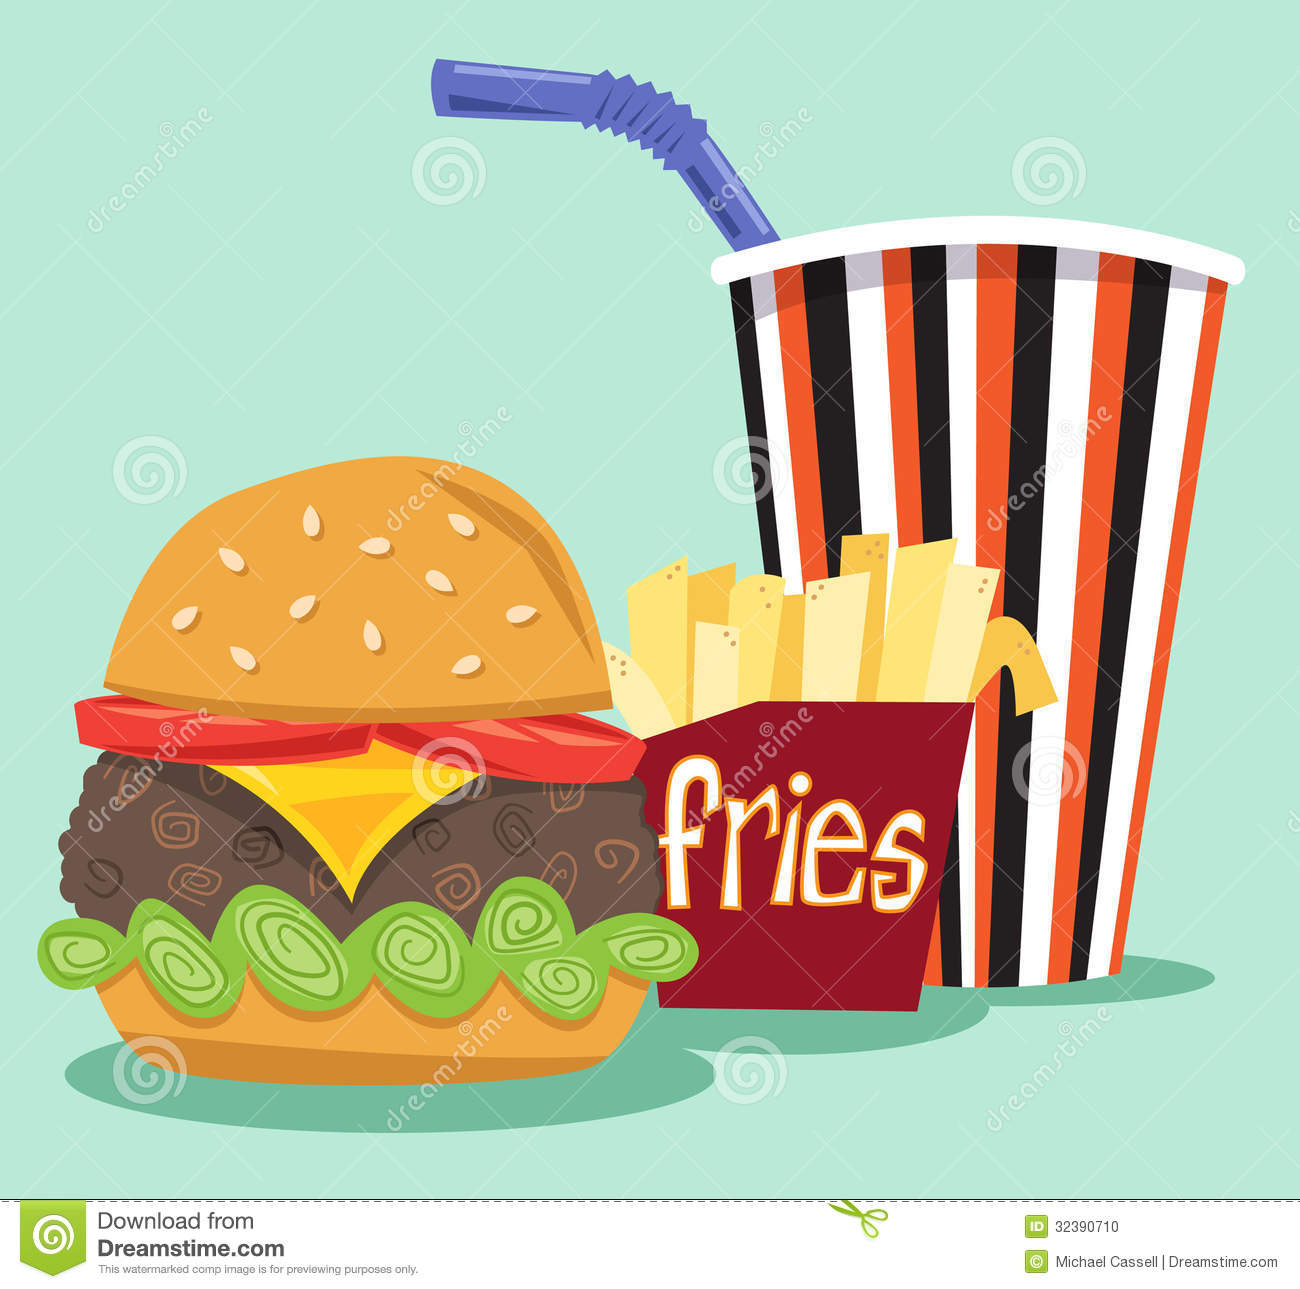 Clipart Hamburger And Fries Burger Meal Stock Photo   Image  32390710